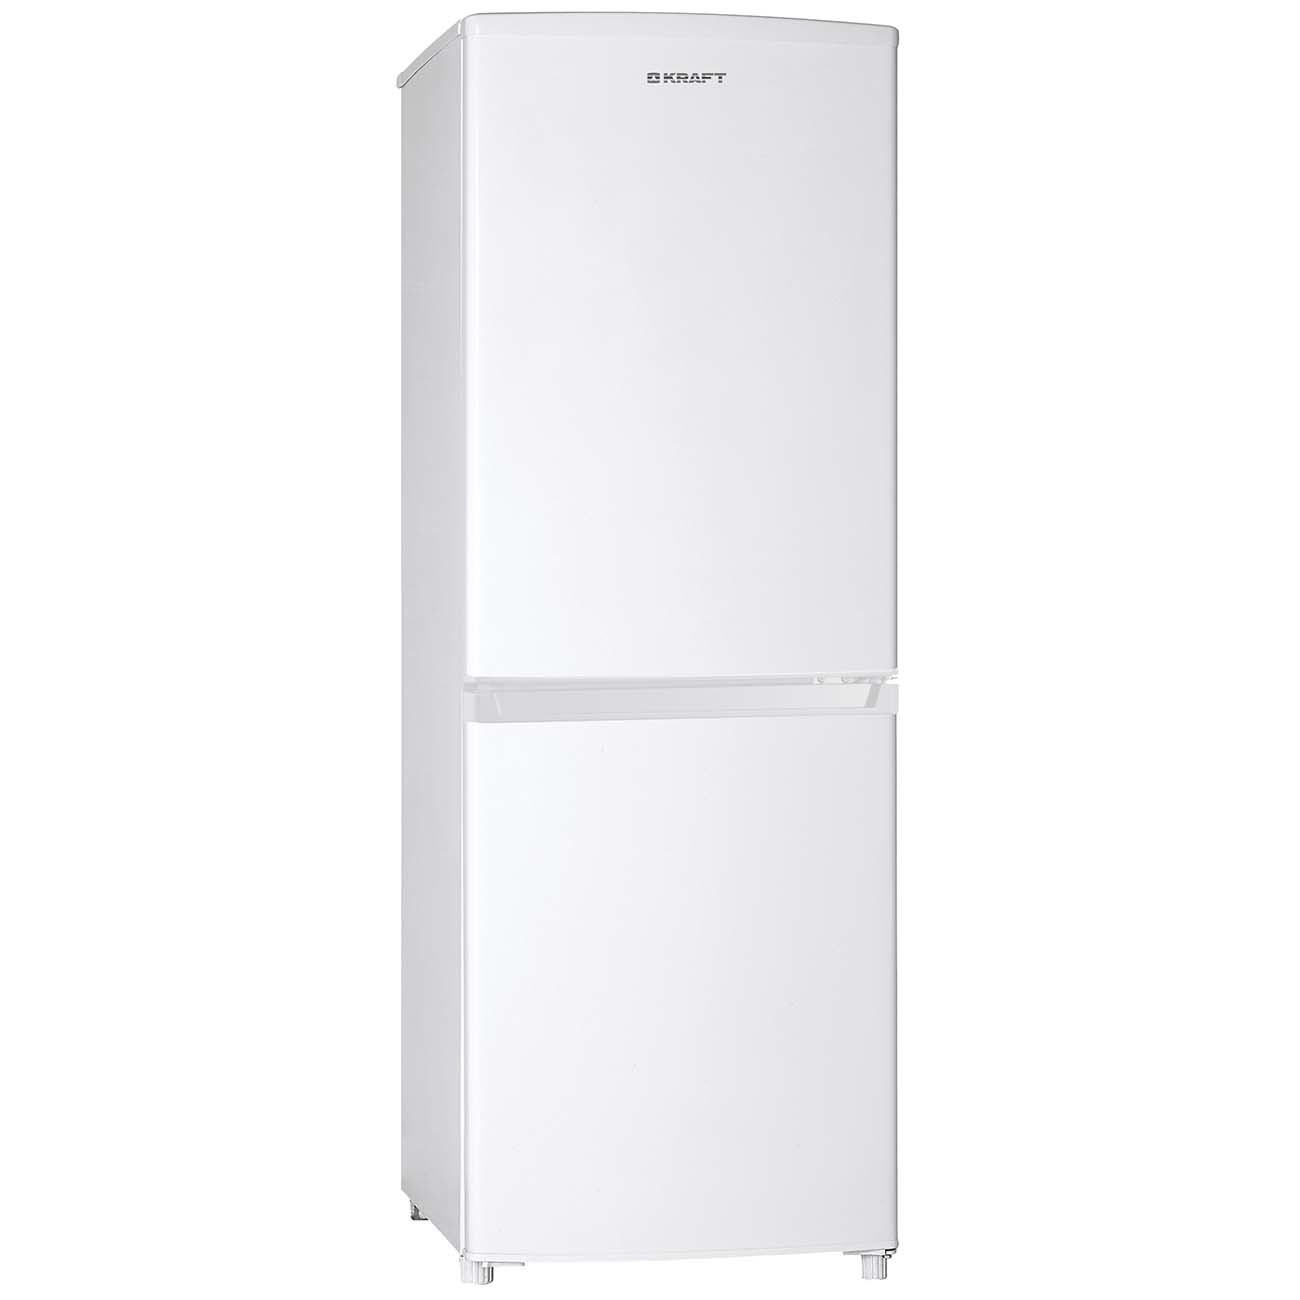 Ariston 1181.3. Холодильник крафт KF-DC 180 W. Холодильник Индезит двухкамерный bia 18 s. Холодильник ATLANT хм 4623-100.